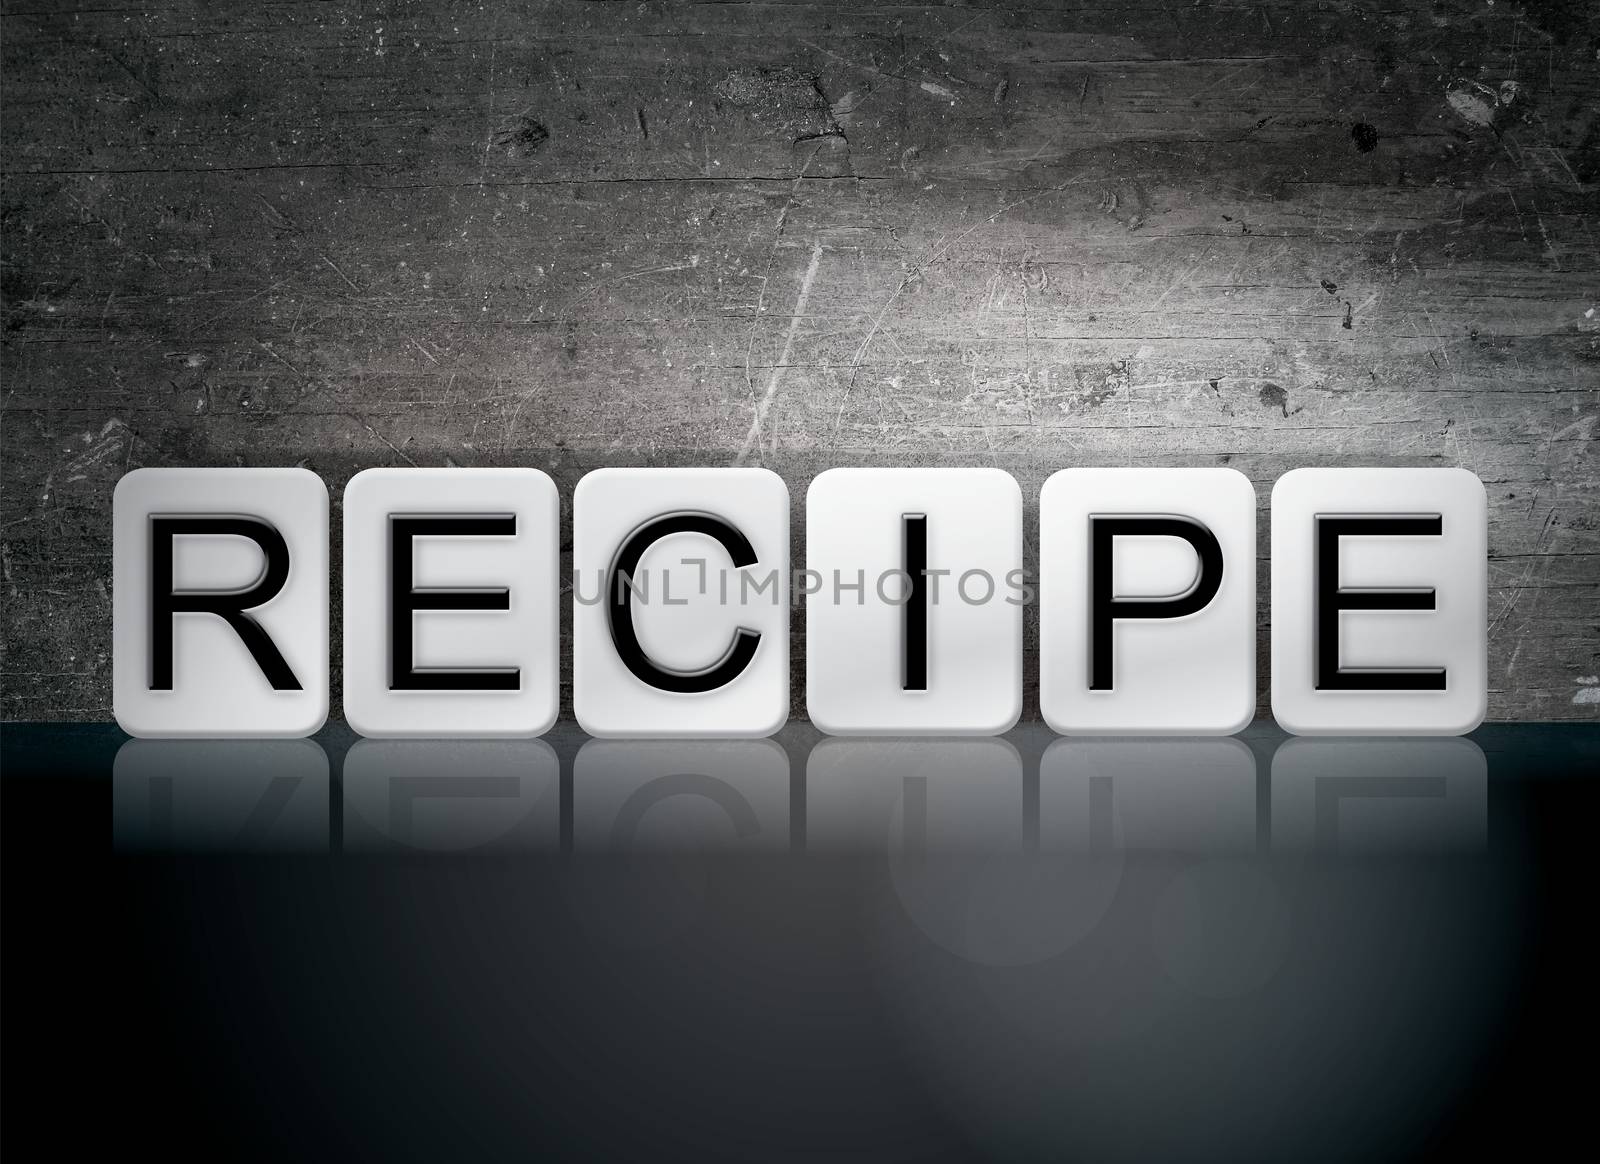 The word "Recipe" written in white tiles against a dark vintage grunge background.